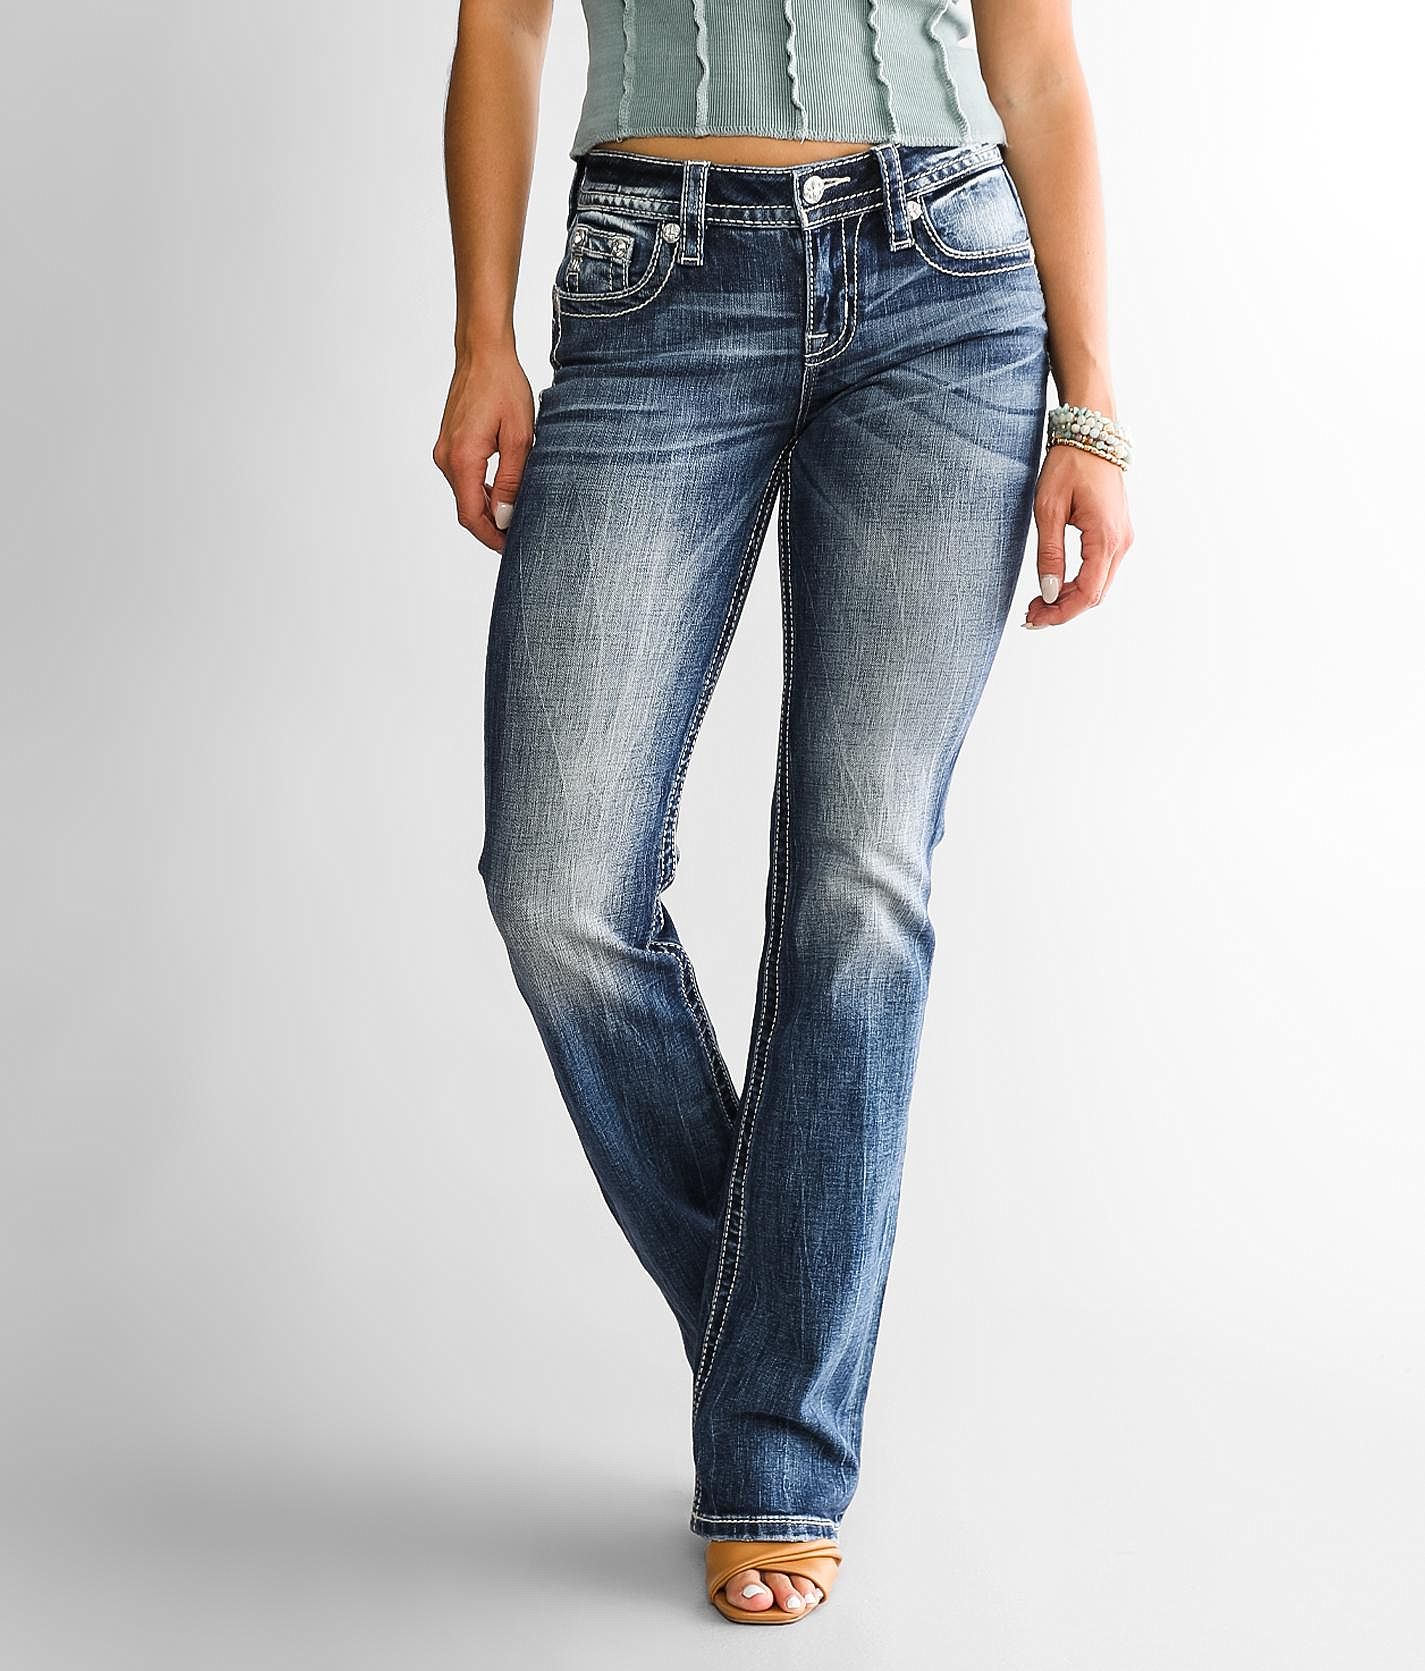 Miss Me Low Rise Boot Stretch Jean - Women's Jeans in K1170 | Buckle